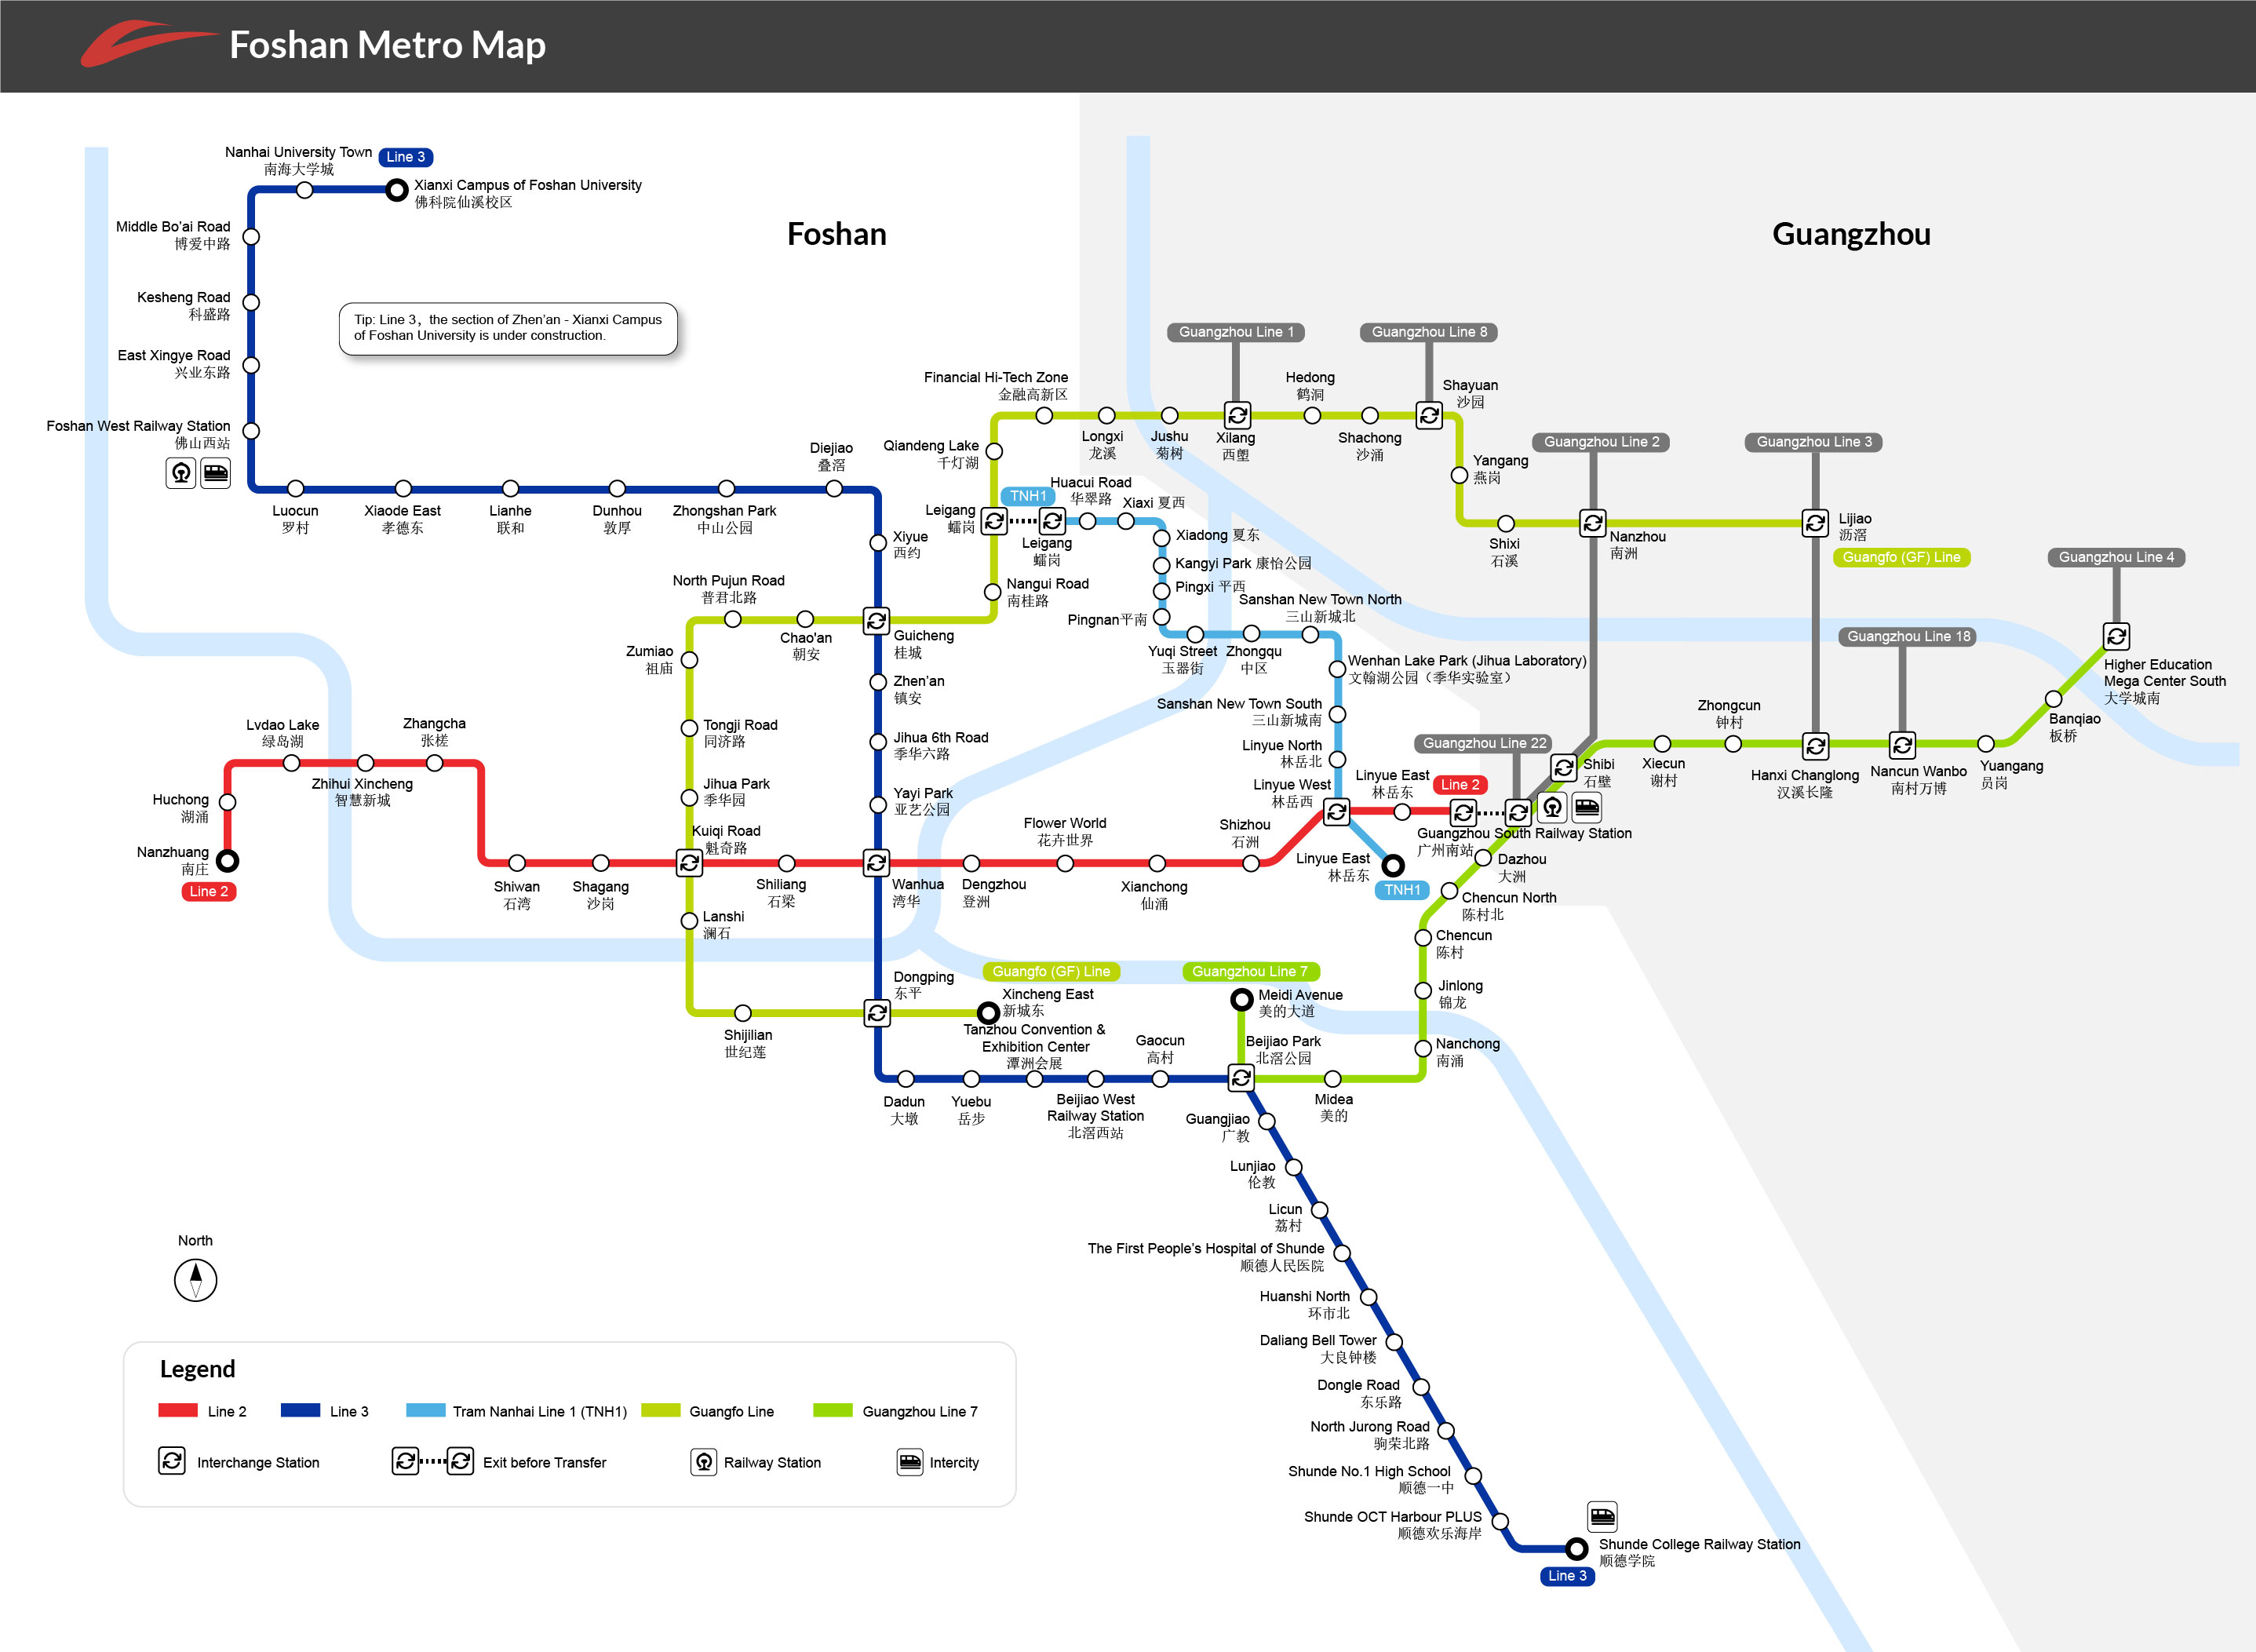 Foshan Metro: Lines, Tram, Timetables, Transfer Stations